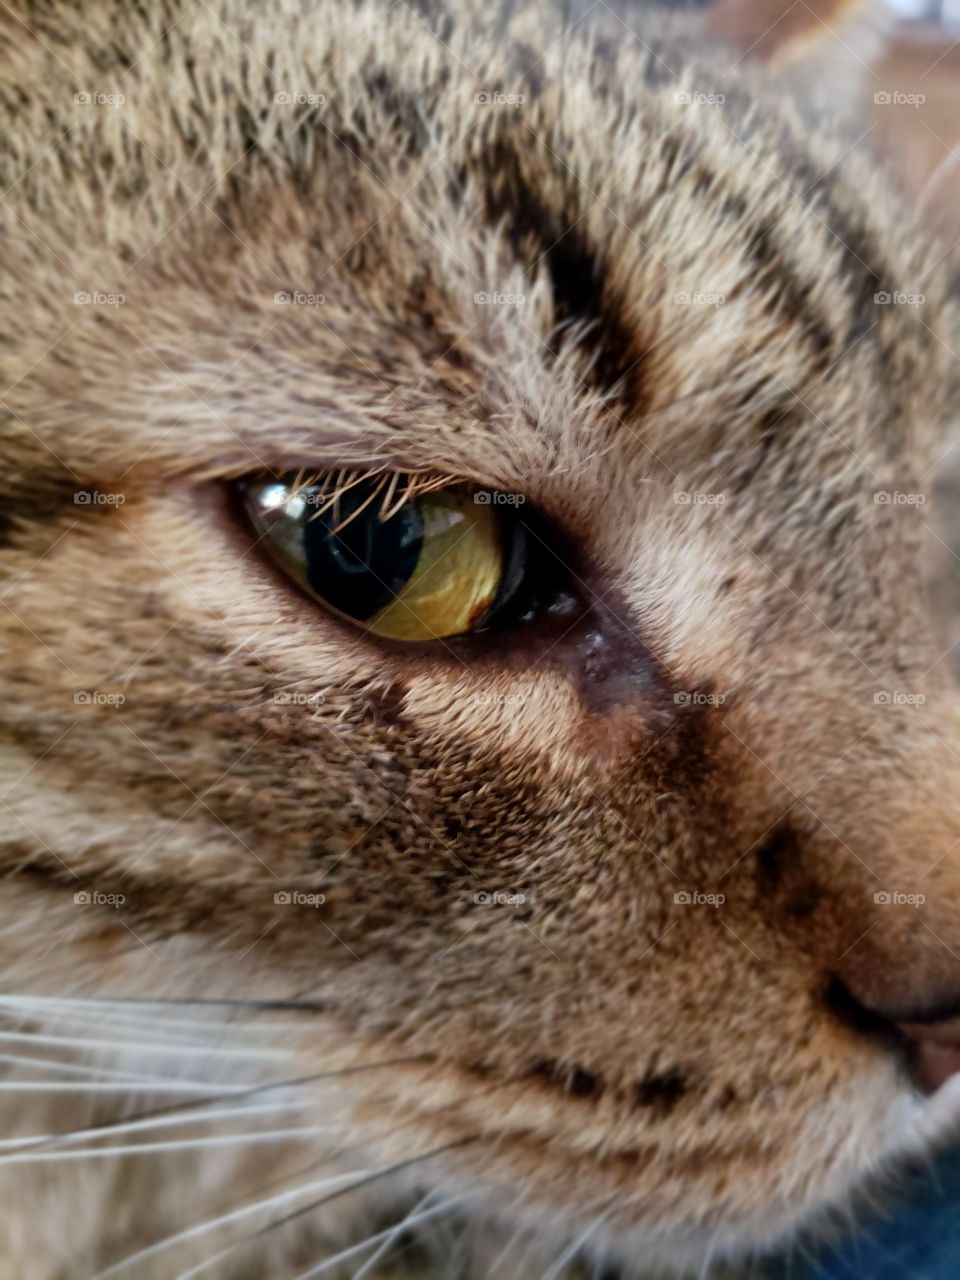 cats eye close up